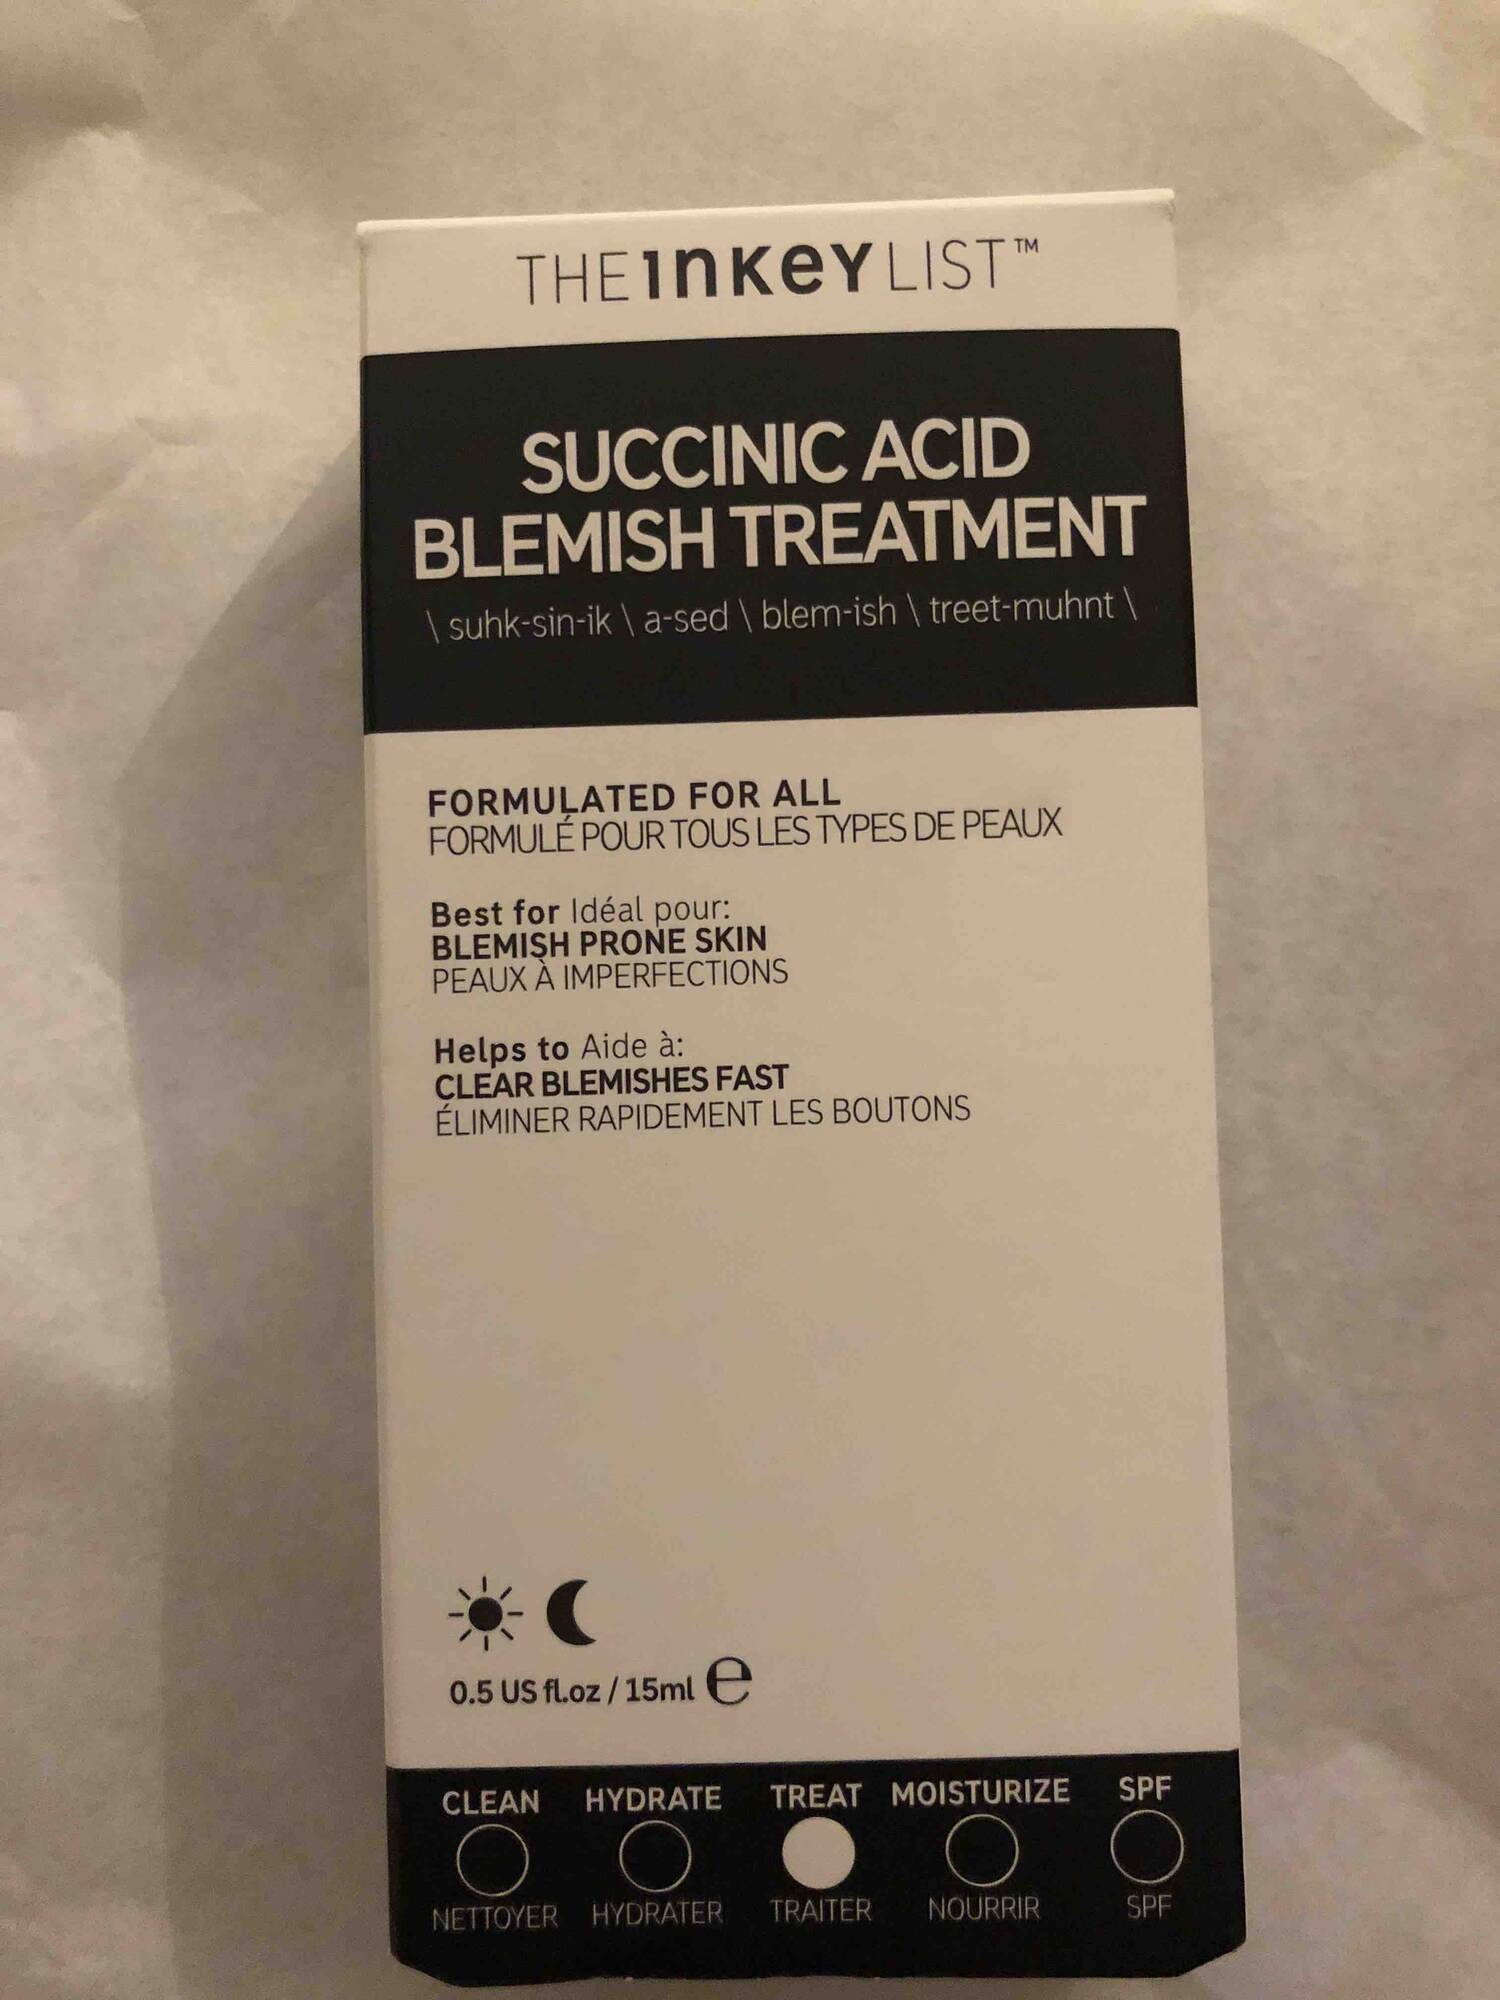 THE INKEY LIST - Succinic acid blemish treatment